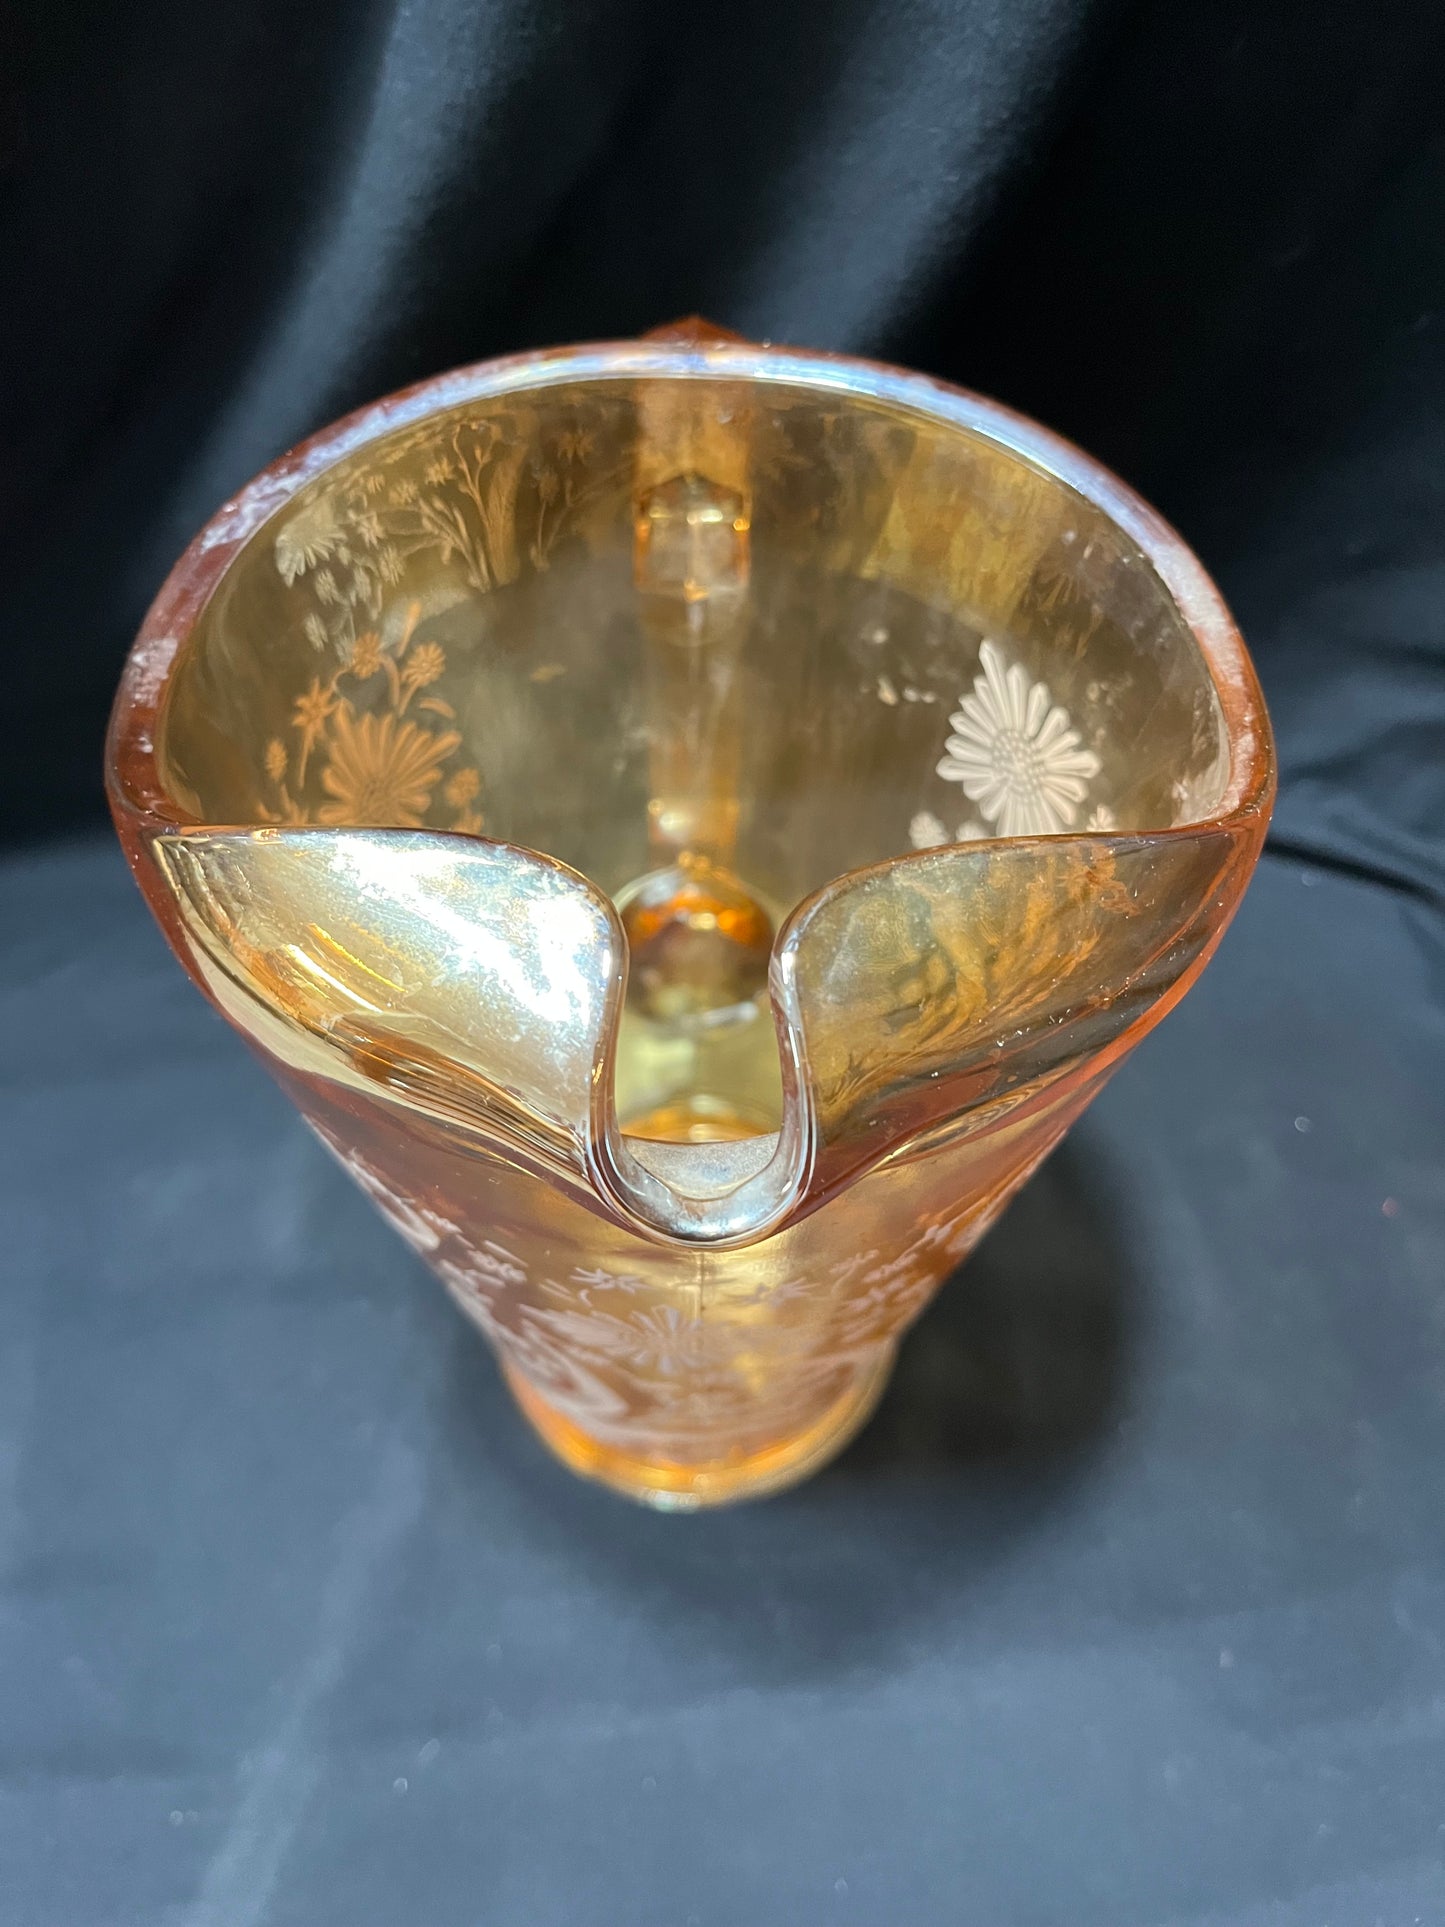 Vintage Jeanette Marigold Carnival Glass Pitcher with Floral Design